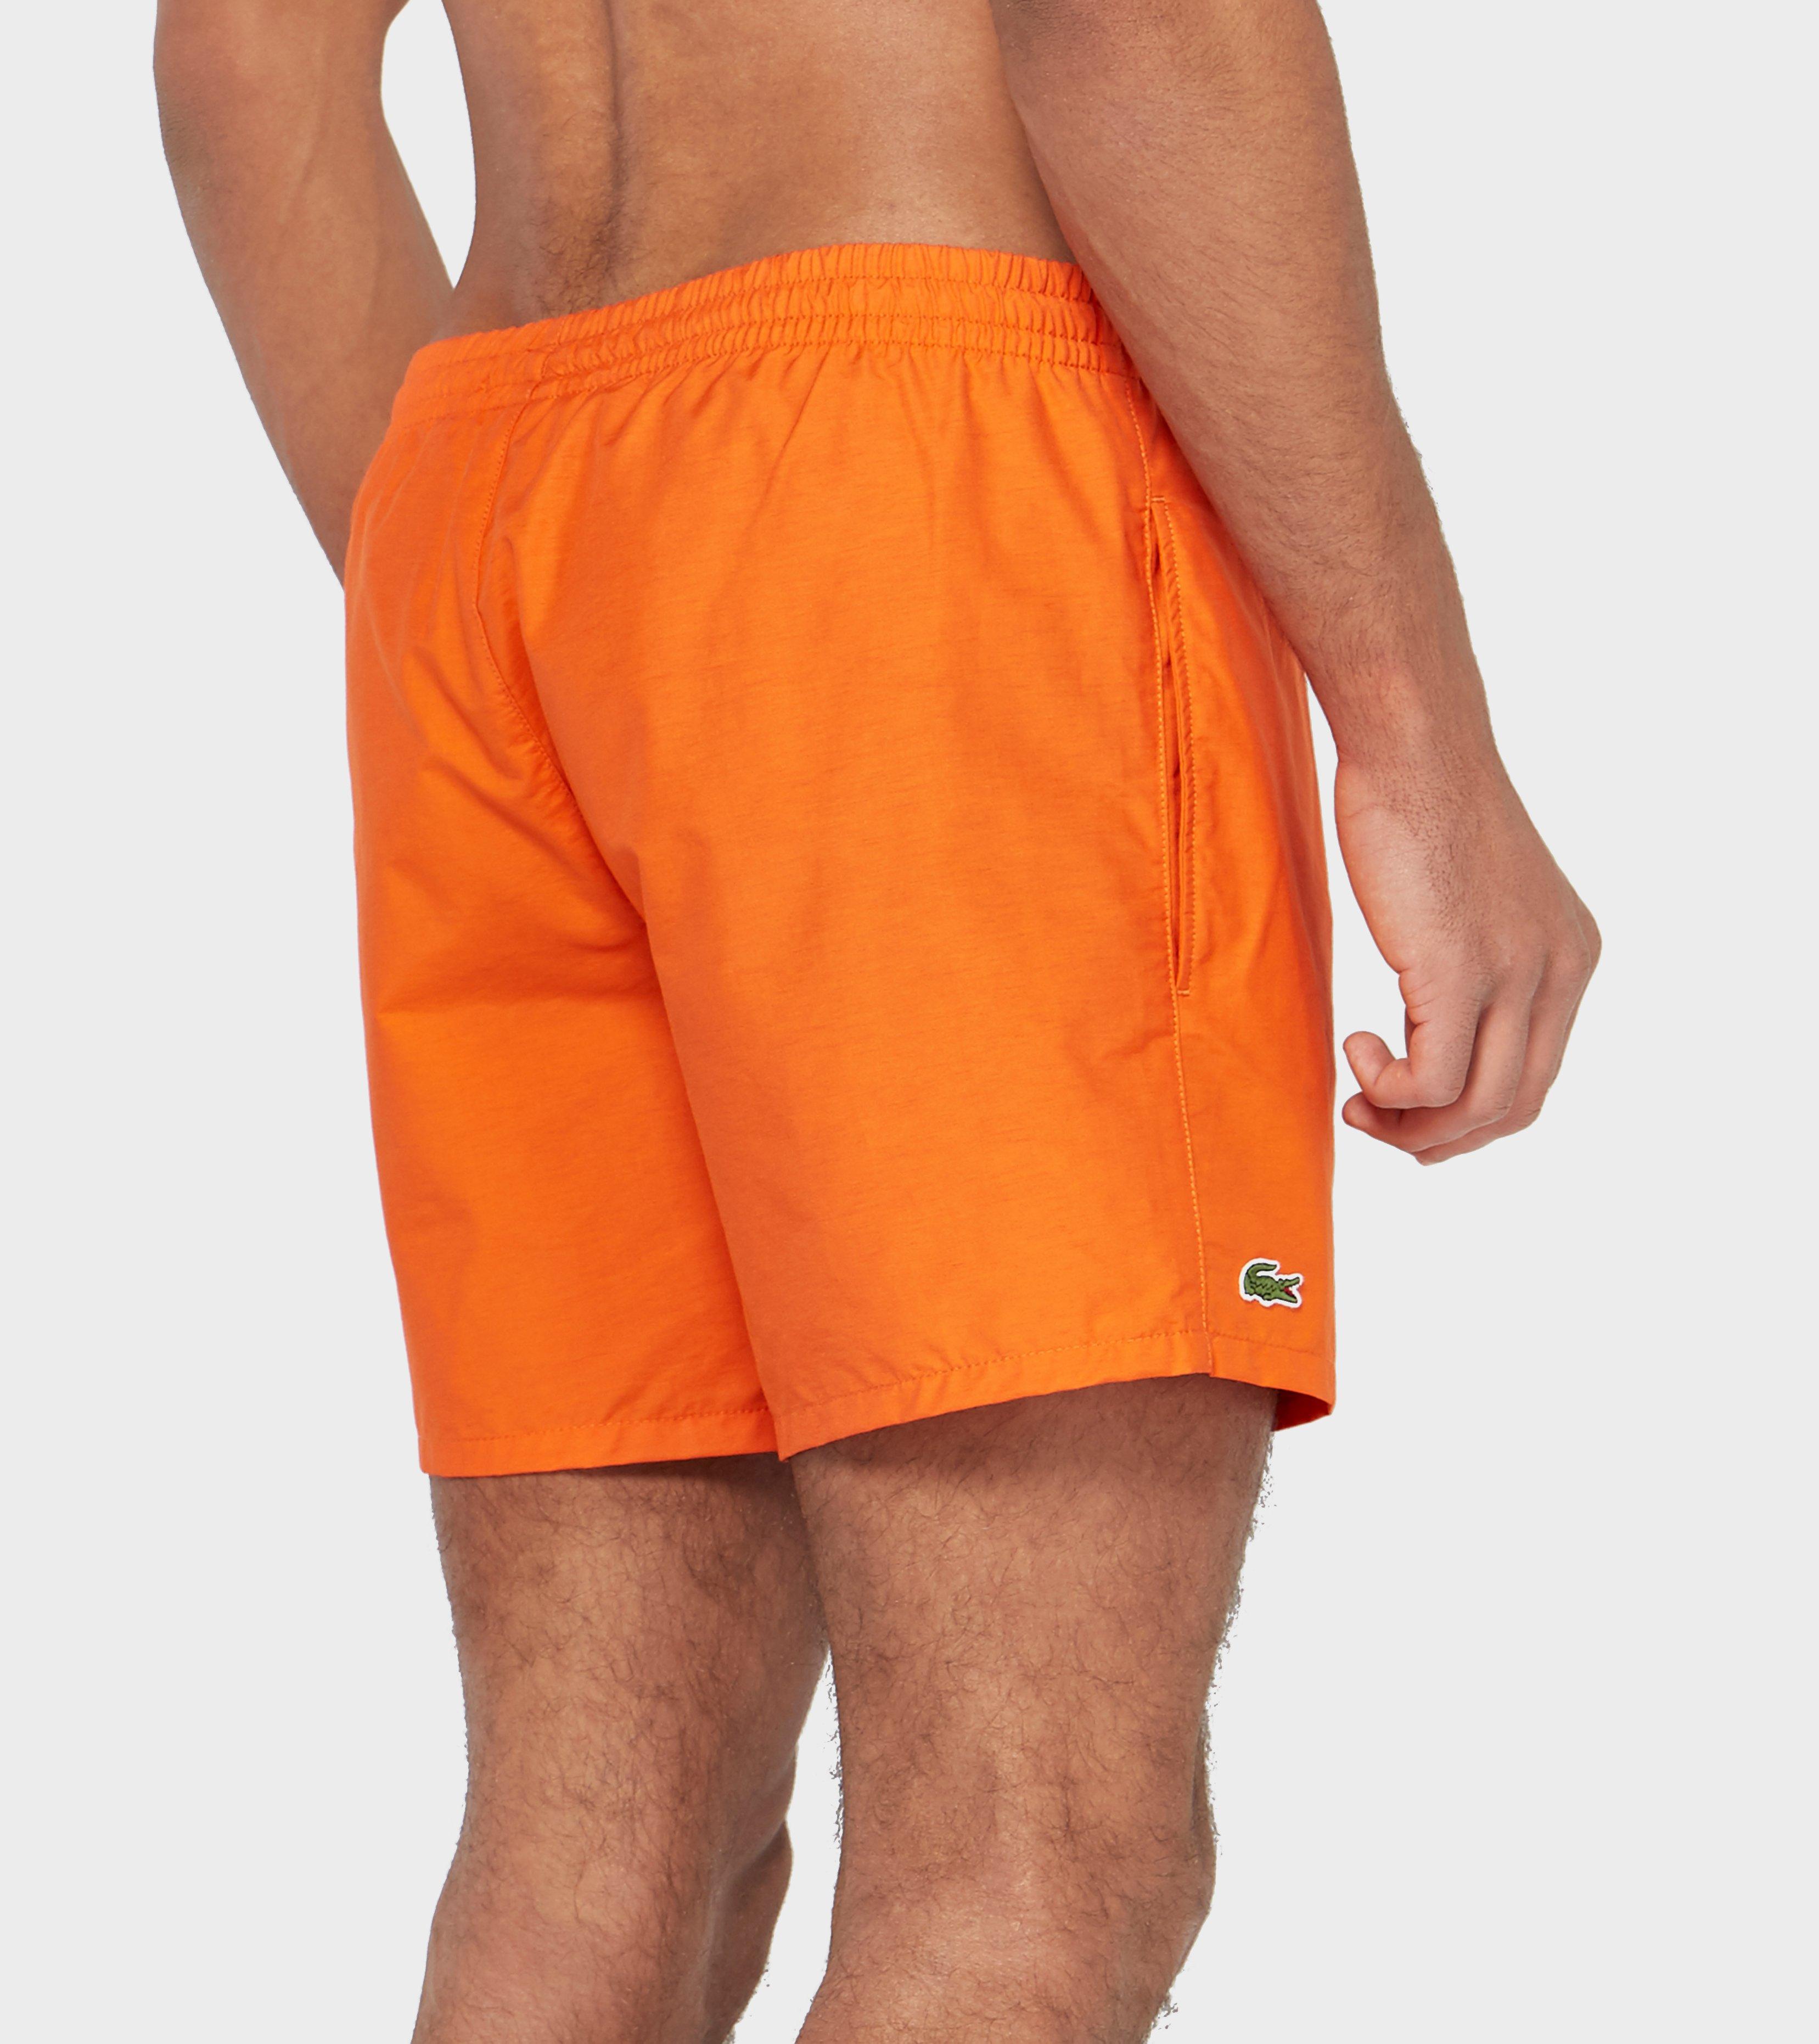 Lacoste Swim Shorts in Orange for Men - Lyst